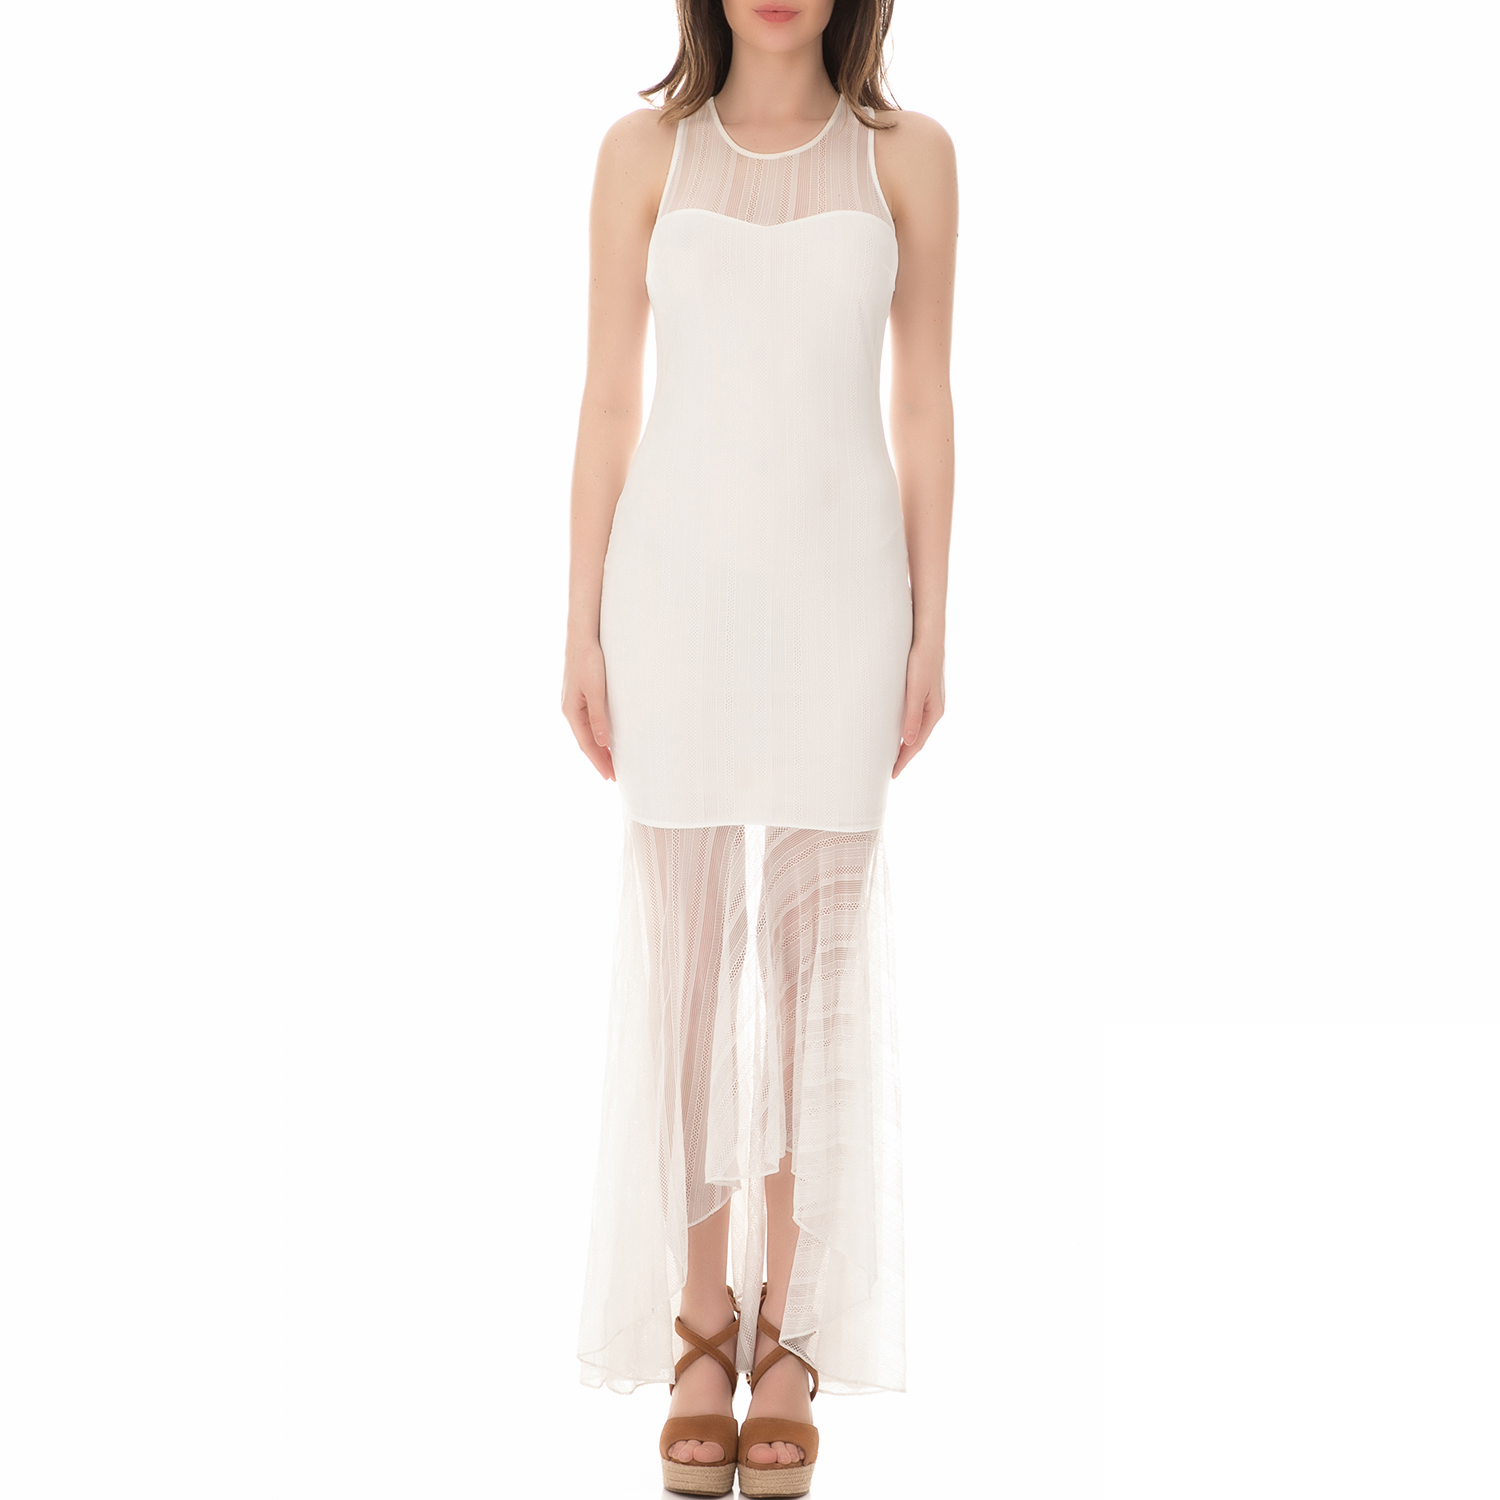 GUESS - Γυναικείο μίνι φόρεμα GUESS GISELLE λευκό Γυναικεία/Ρούχα/Φορέματα/Μίνι